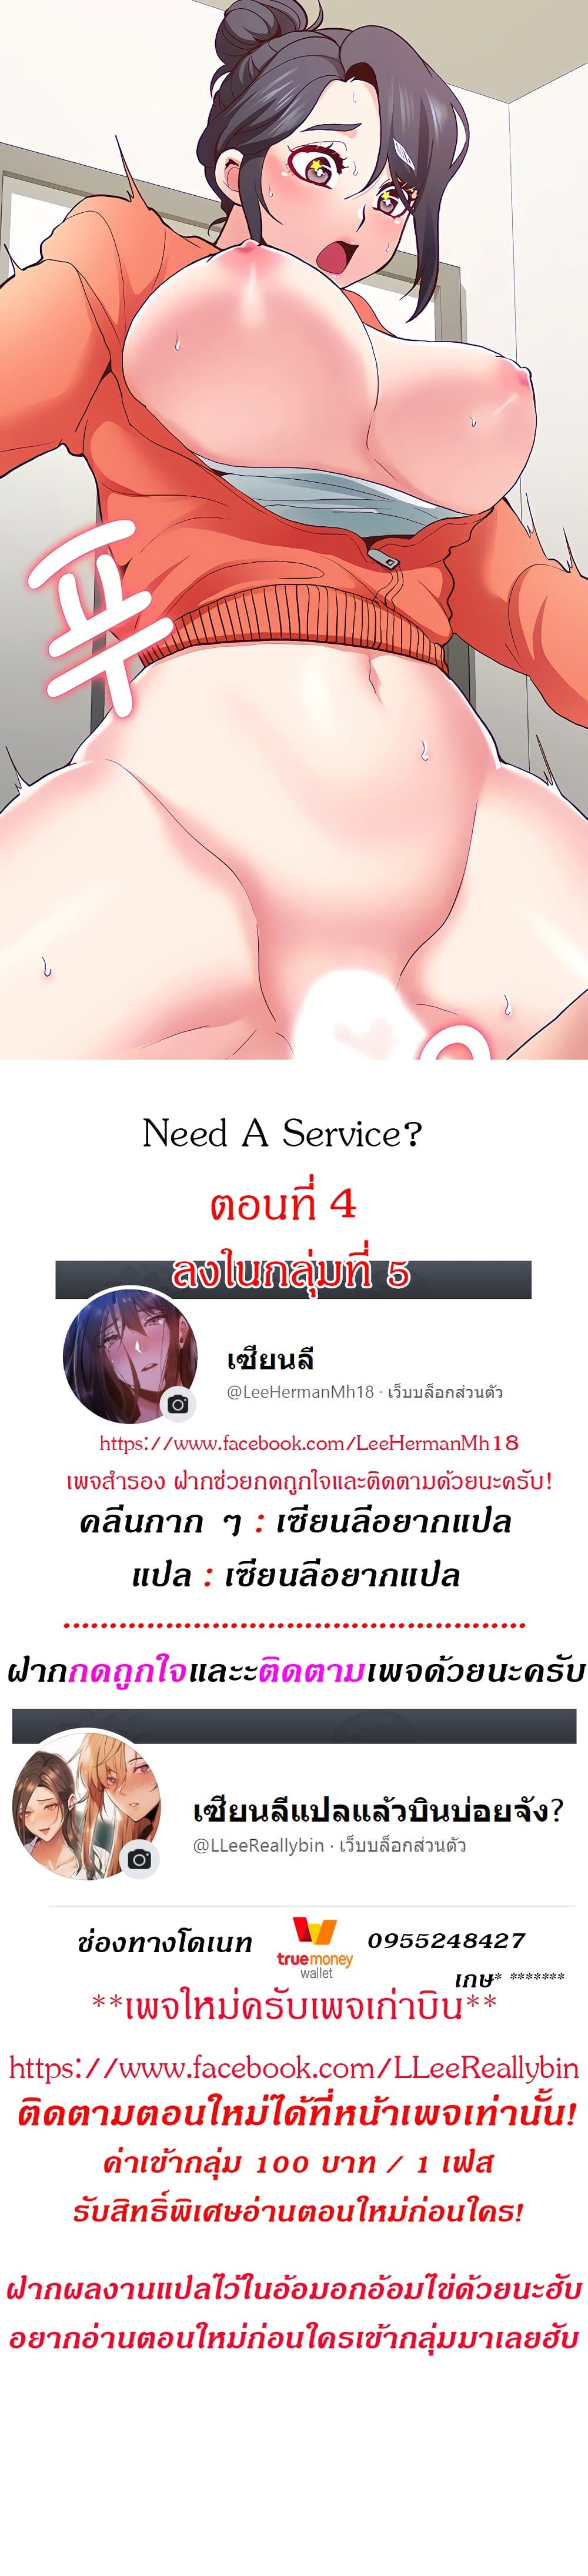 Need A Service? 4-4